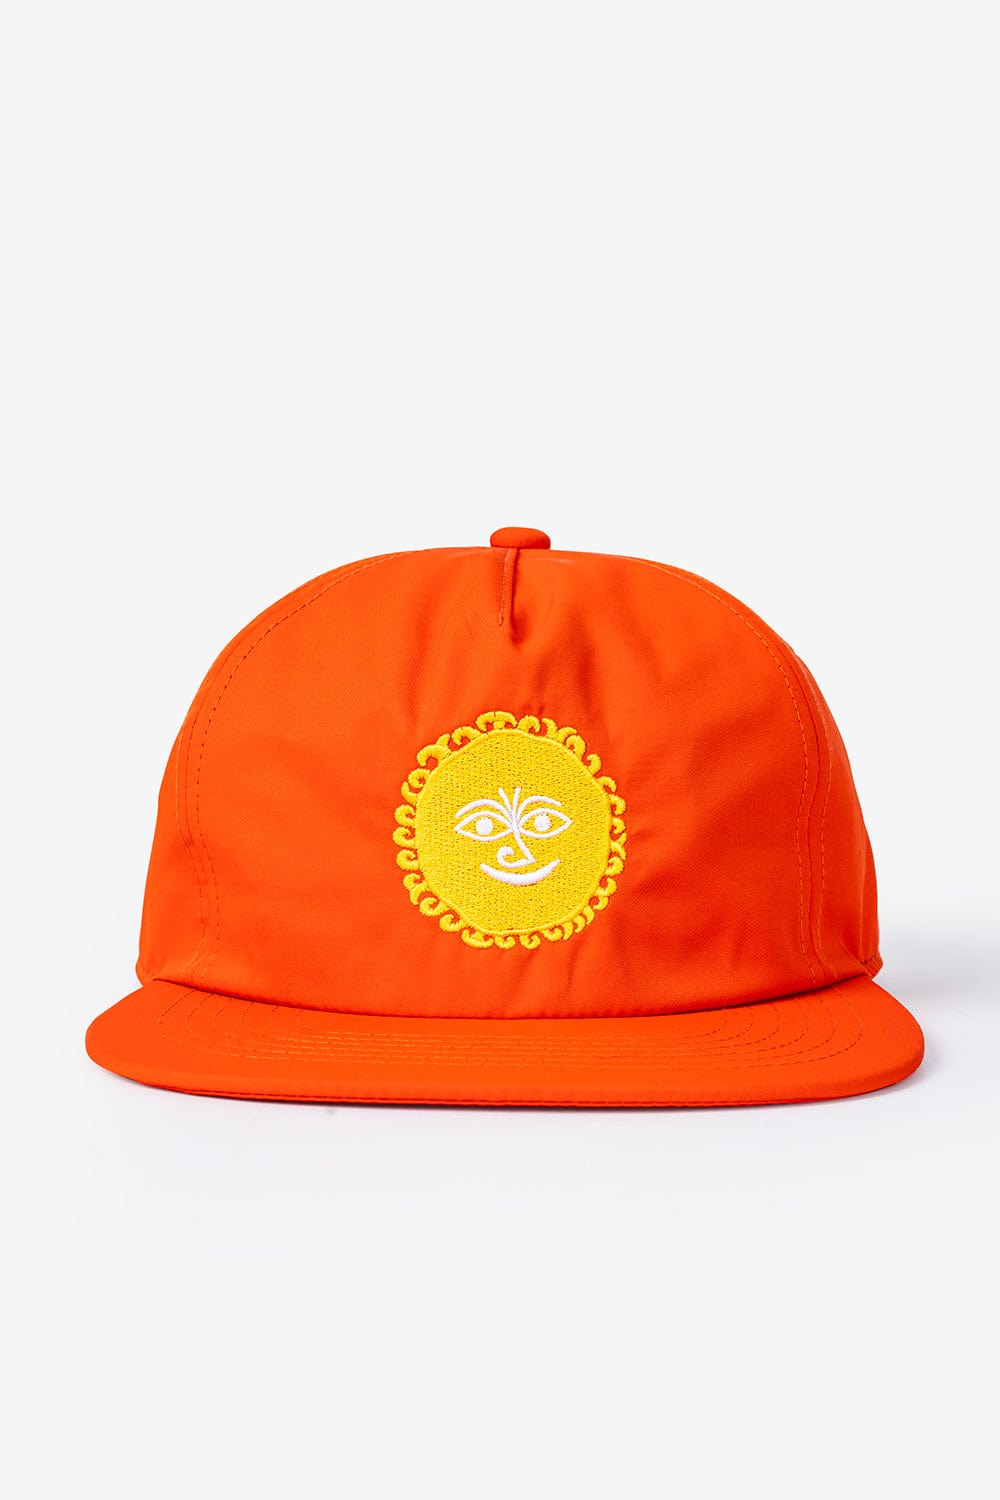 Commonwealth Sunwaves Hat (Orange)